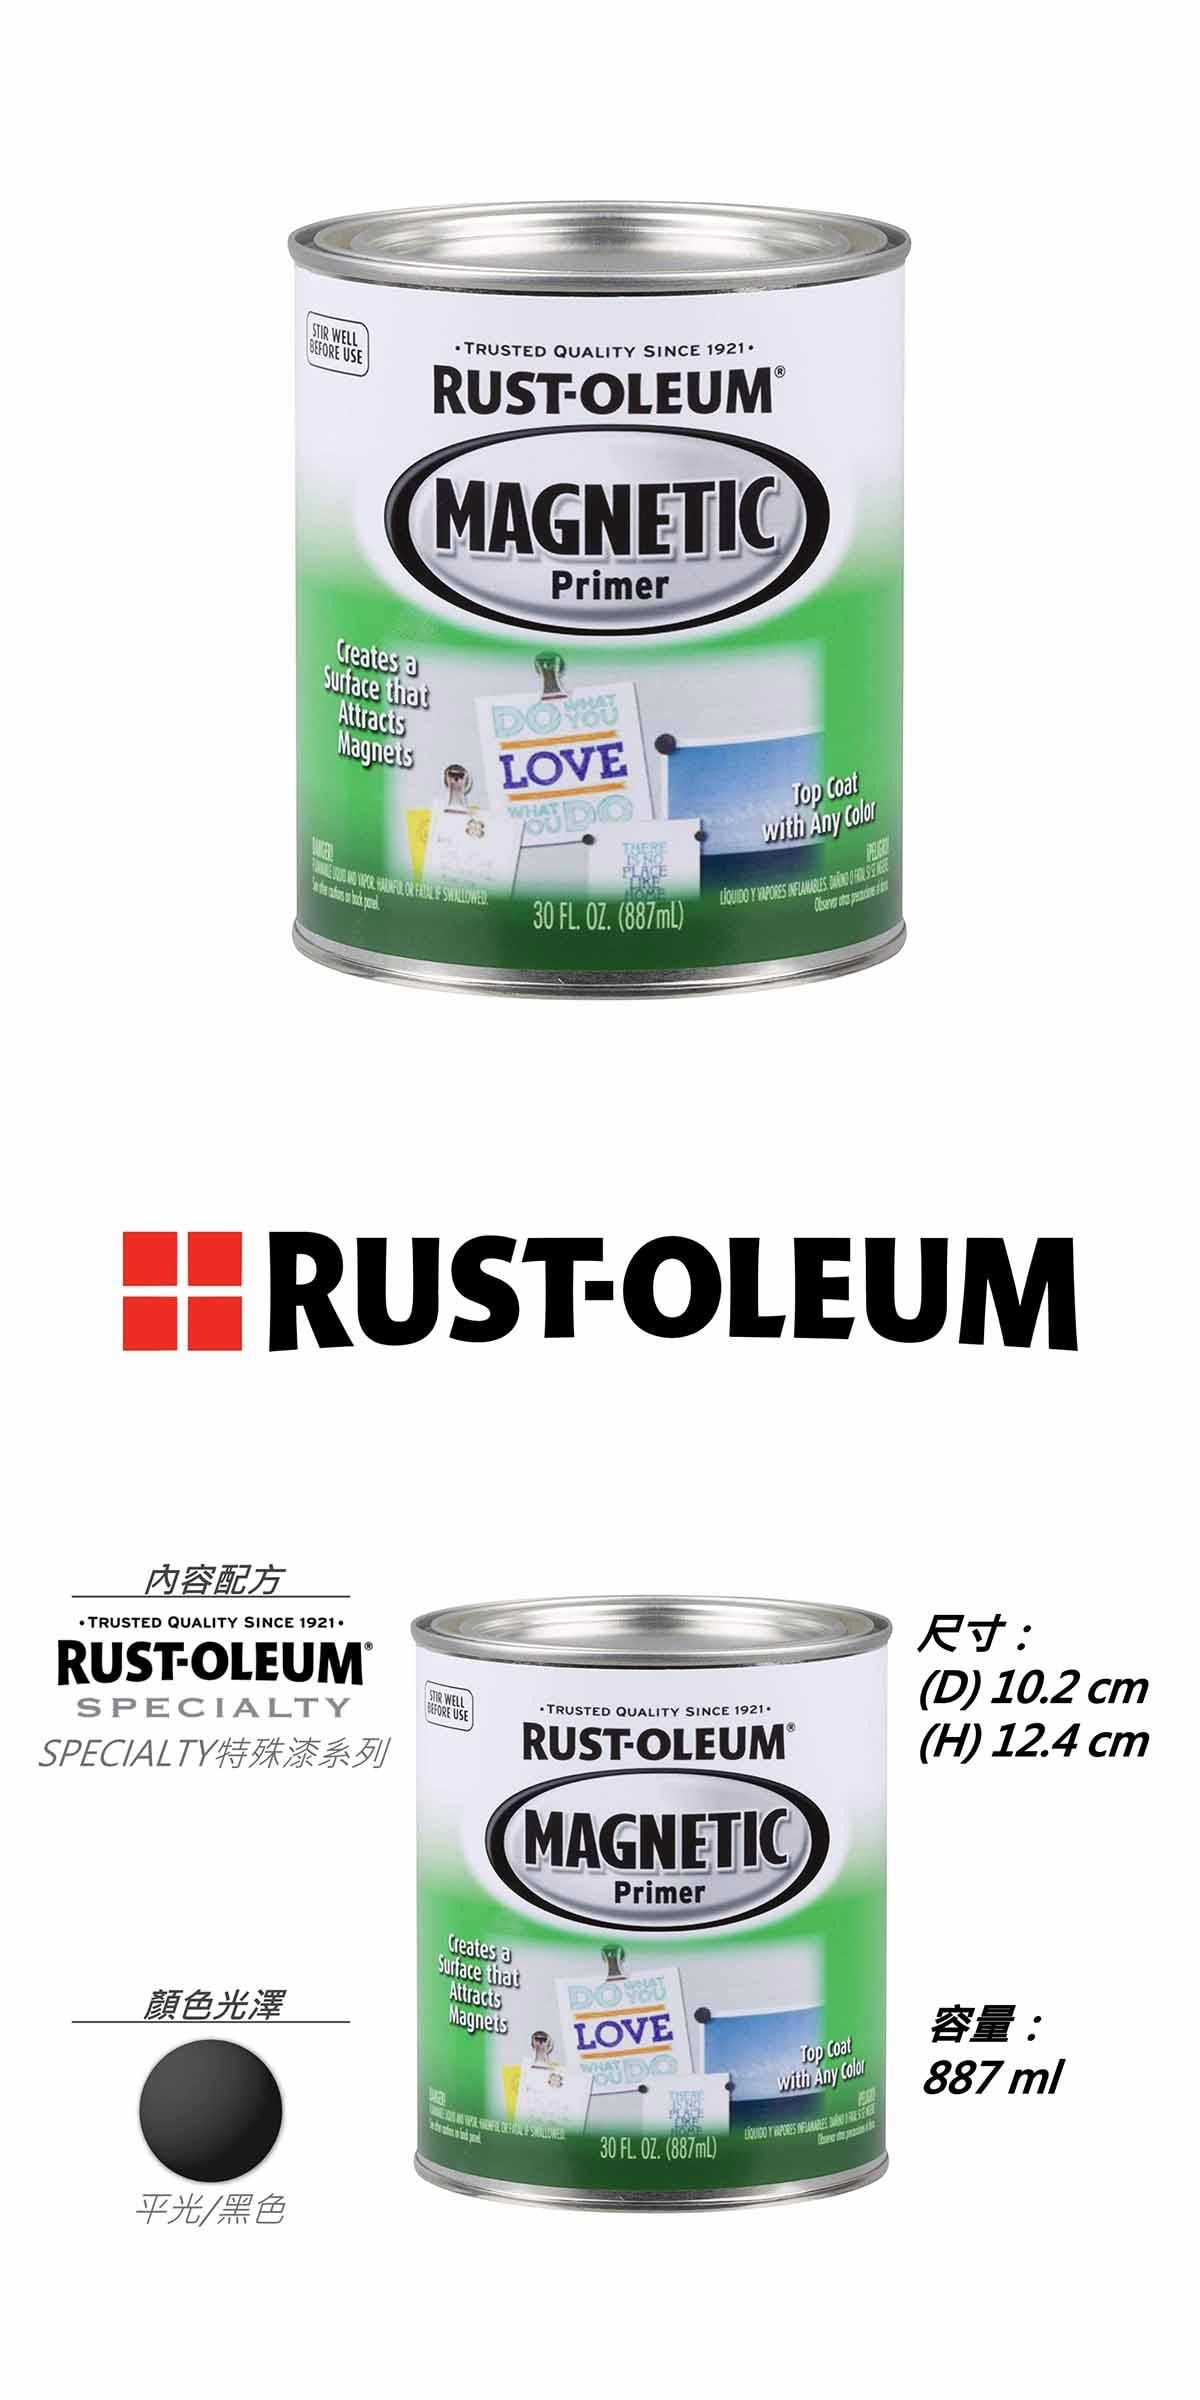 RUSTOLEUM 樂立恩 磁性底漆，創造三倍加強的可磁吸表面，適用多種基面材質，可搭配黑板、白板漆使用。